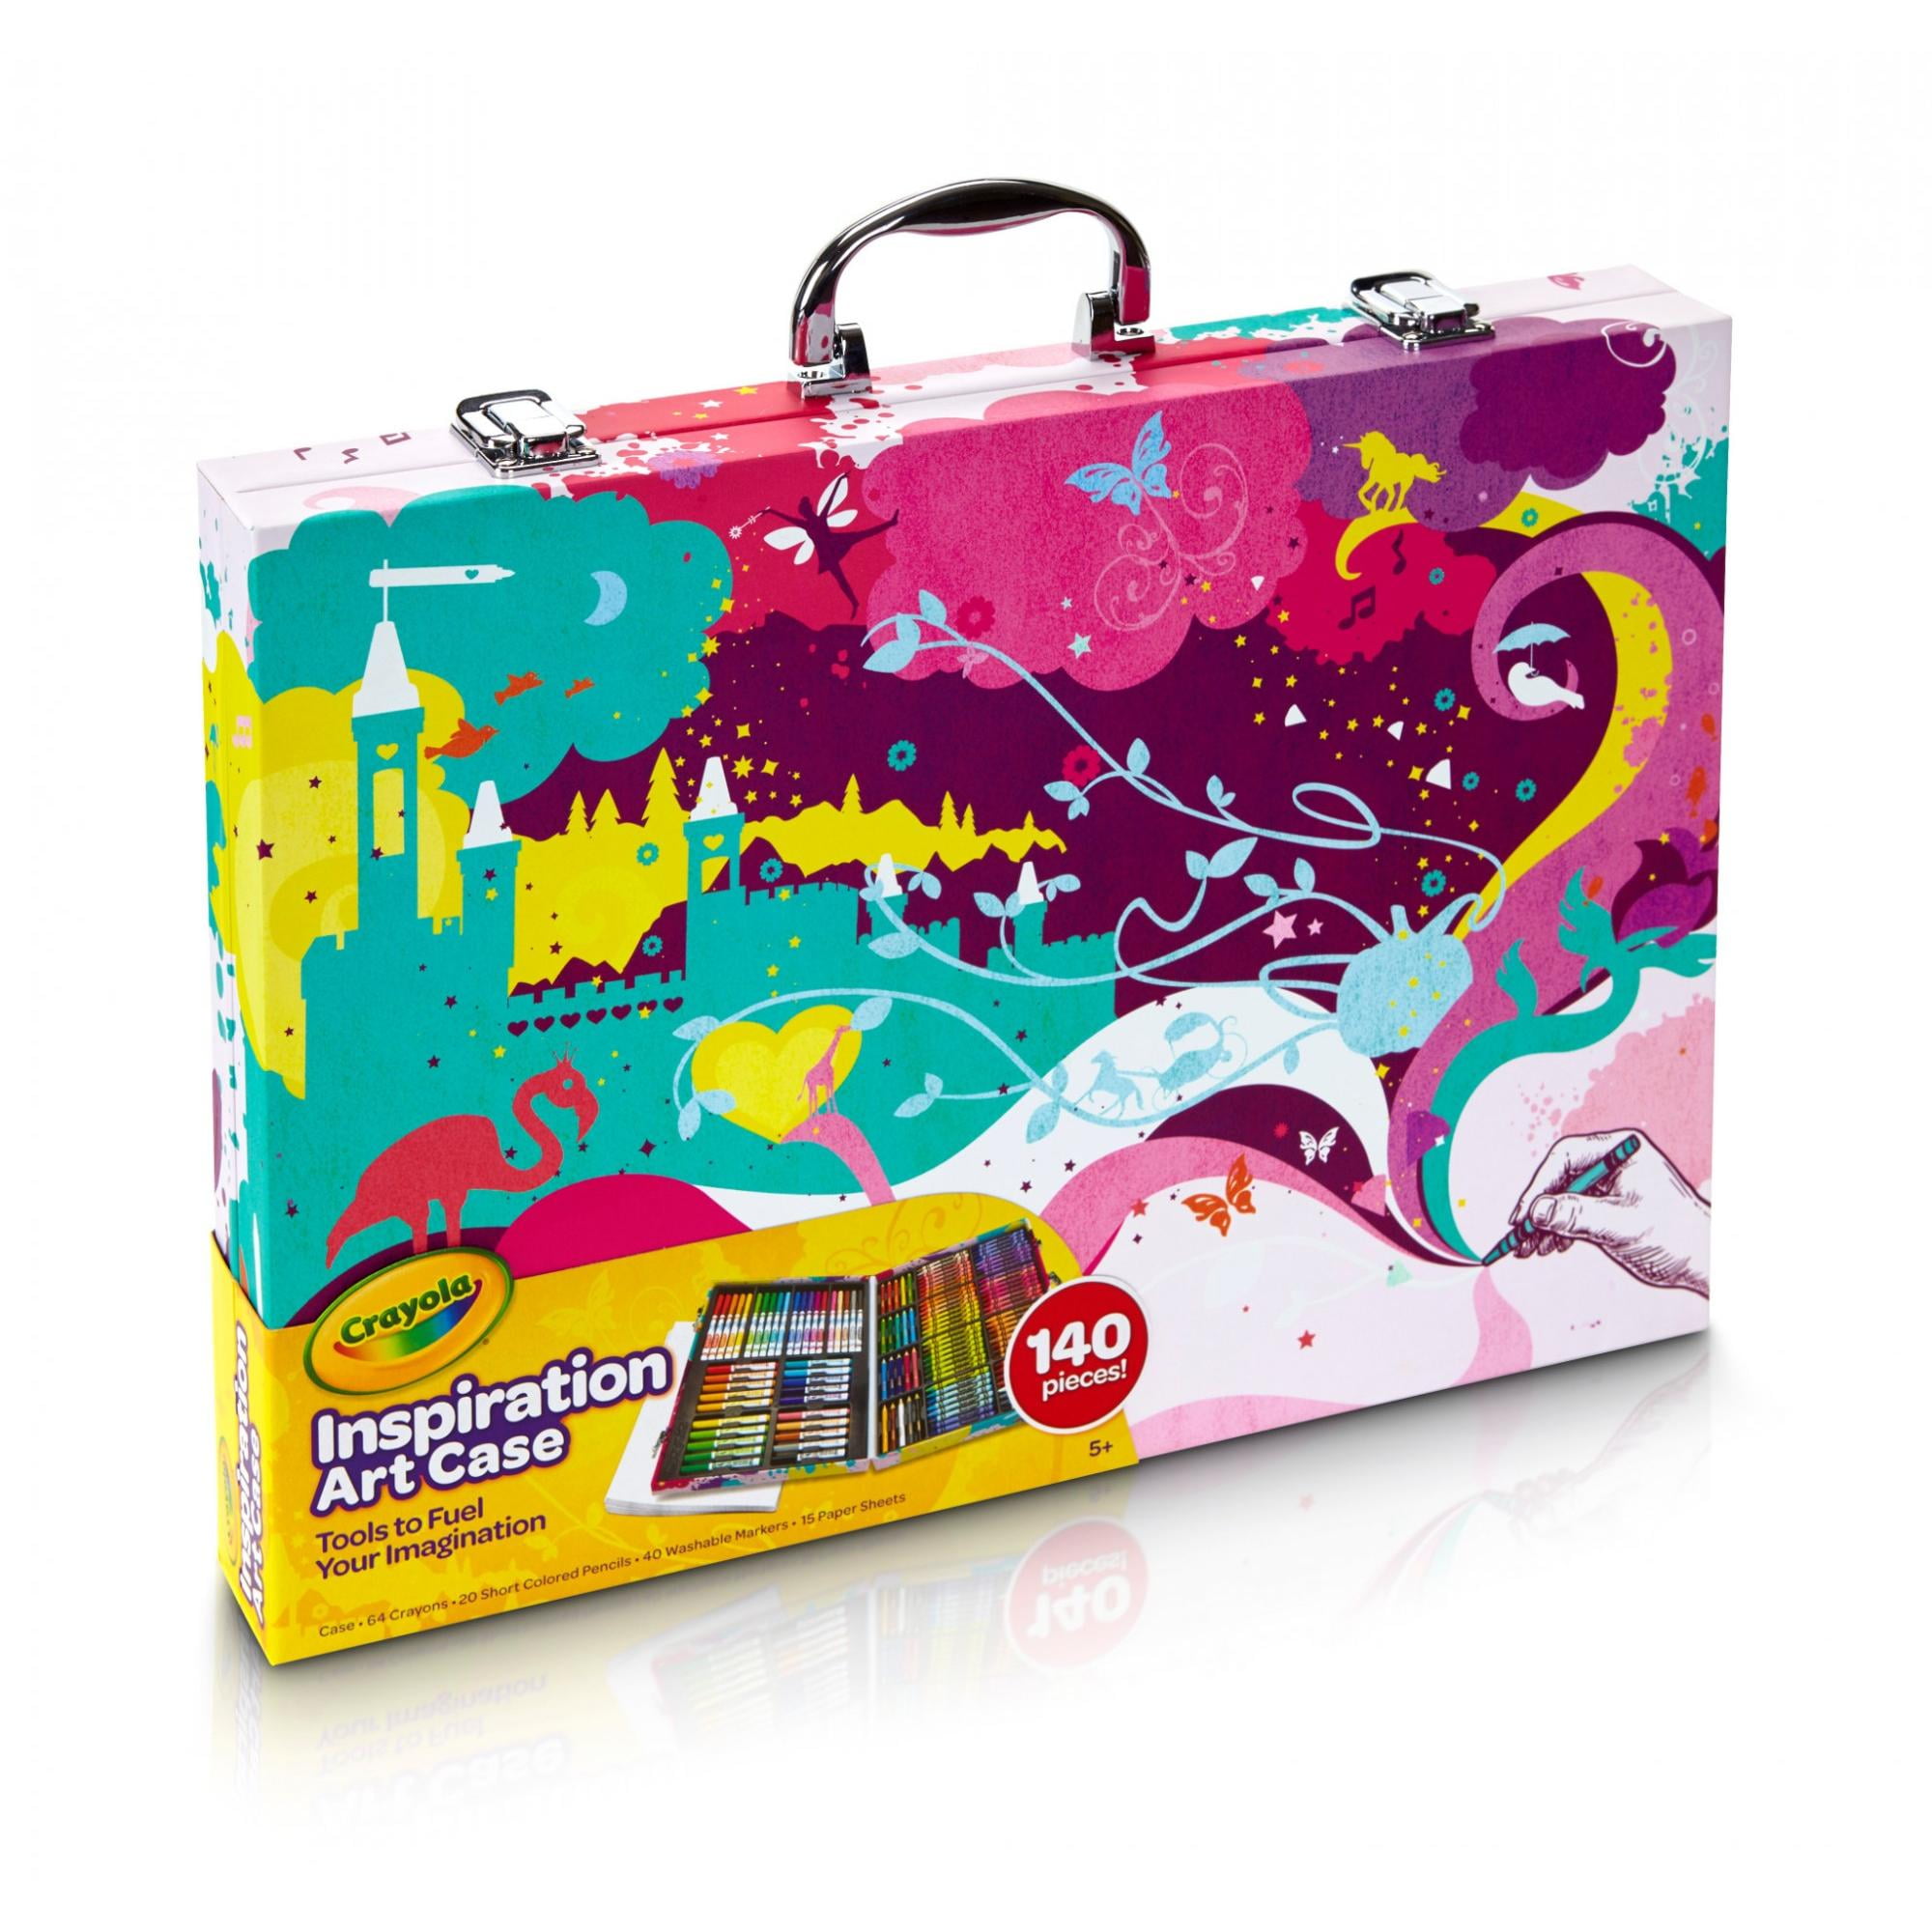 Crayola Assorted Zigzag Inspiration Art Case, 140 Piece, Art Set for Kids 